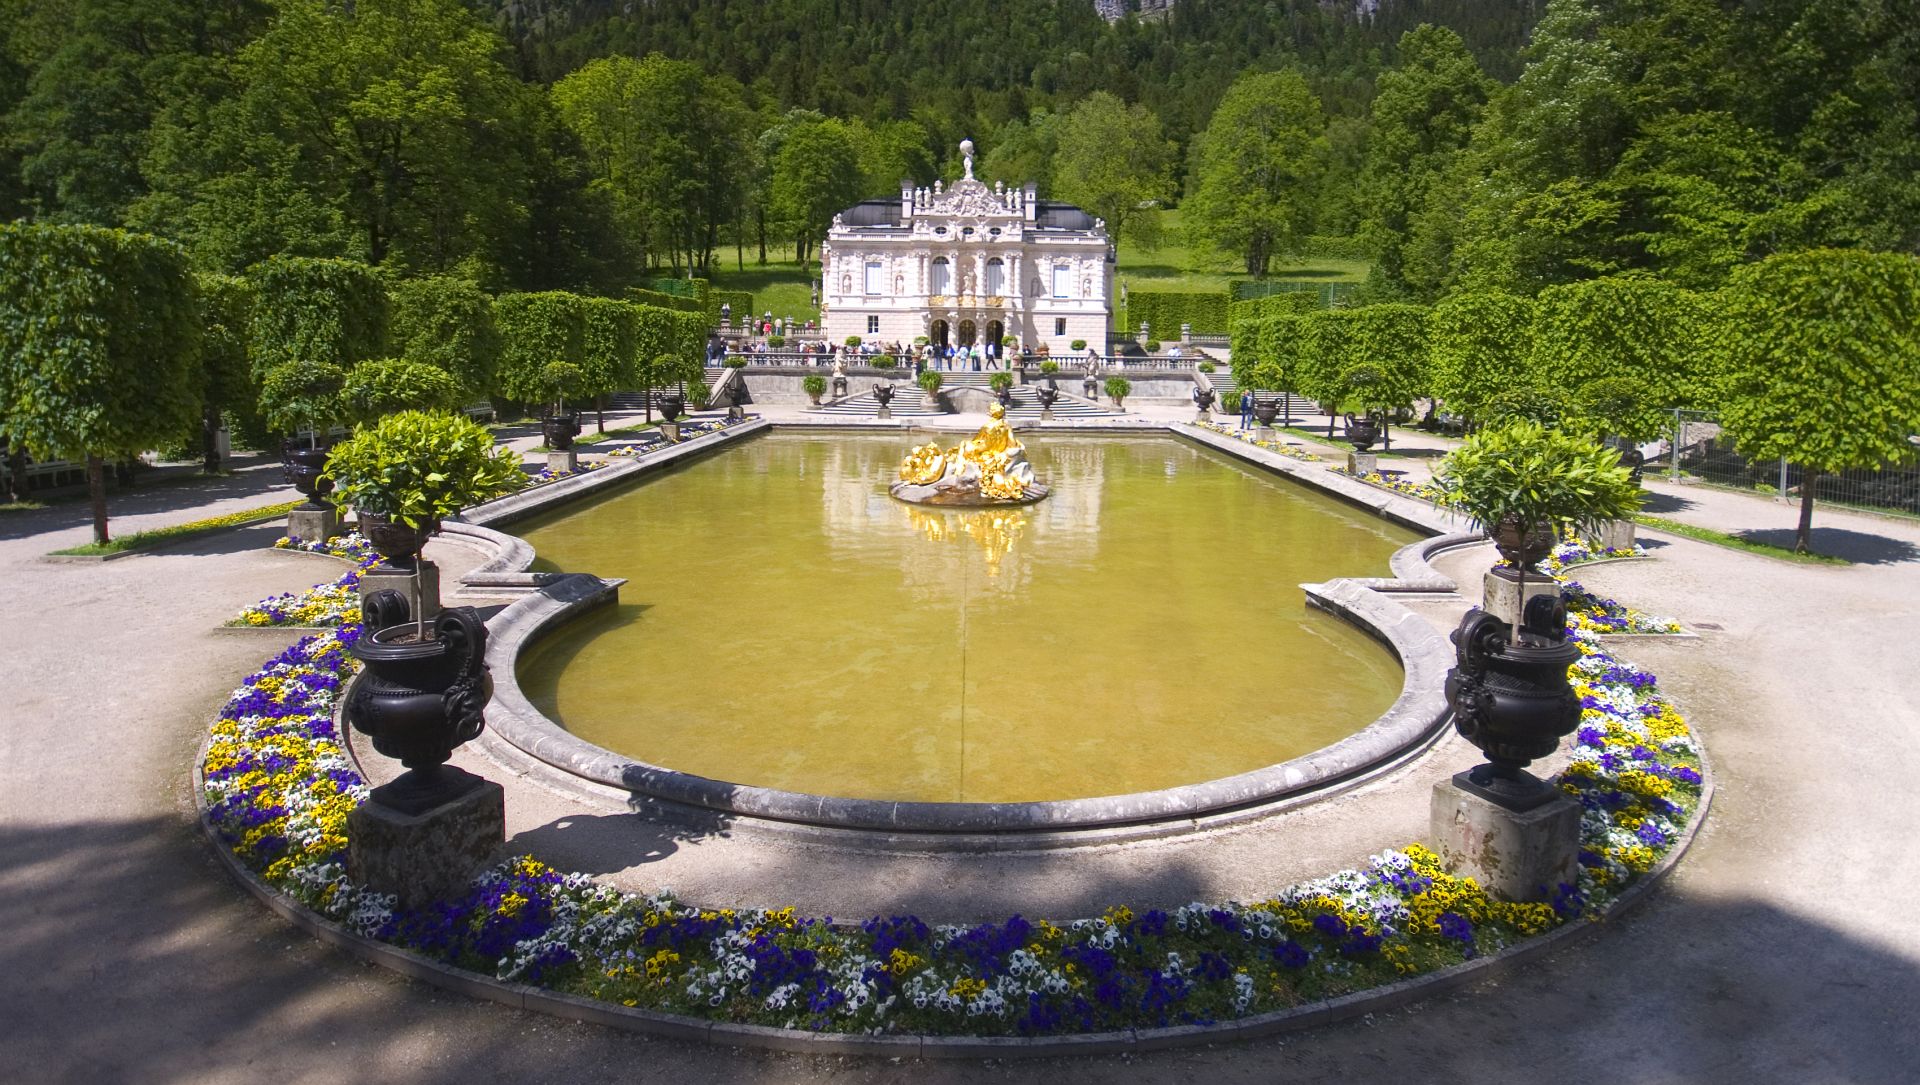 The Linderhof Palace